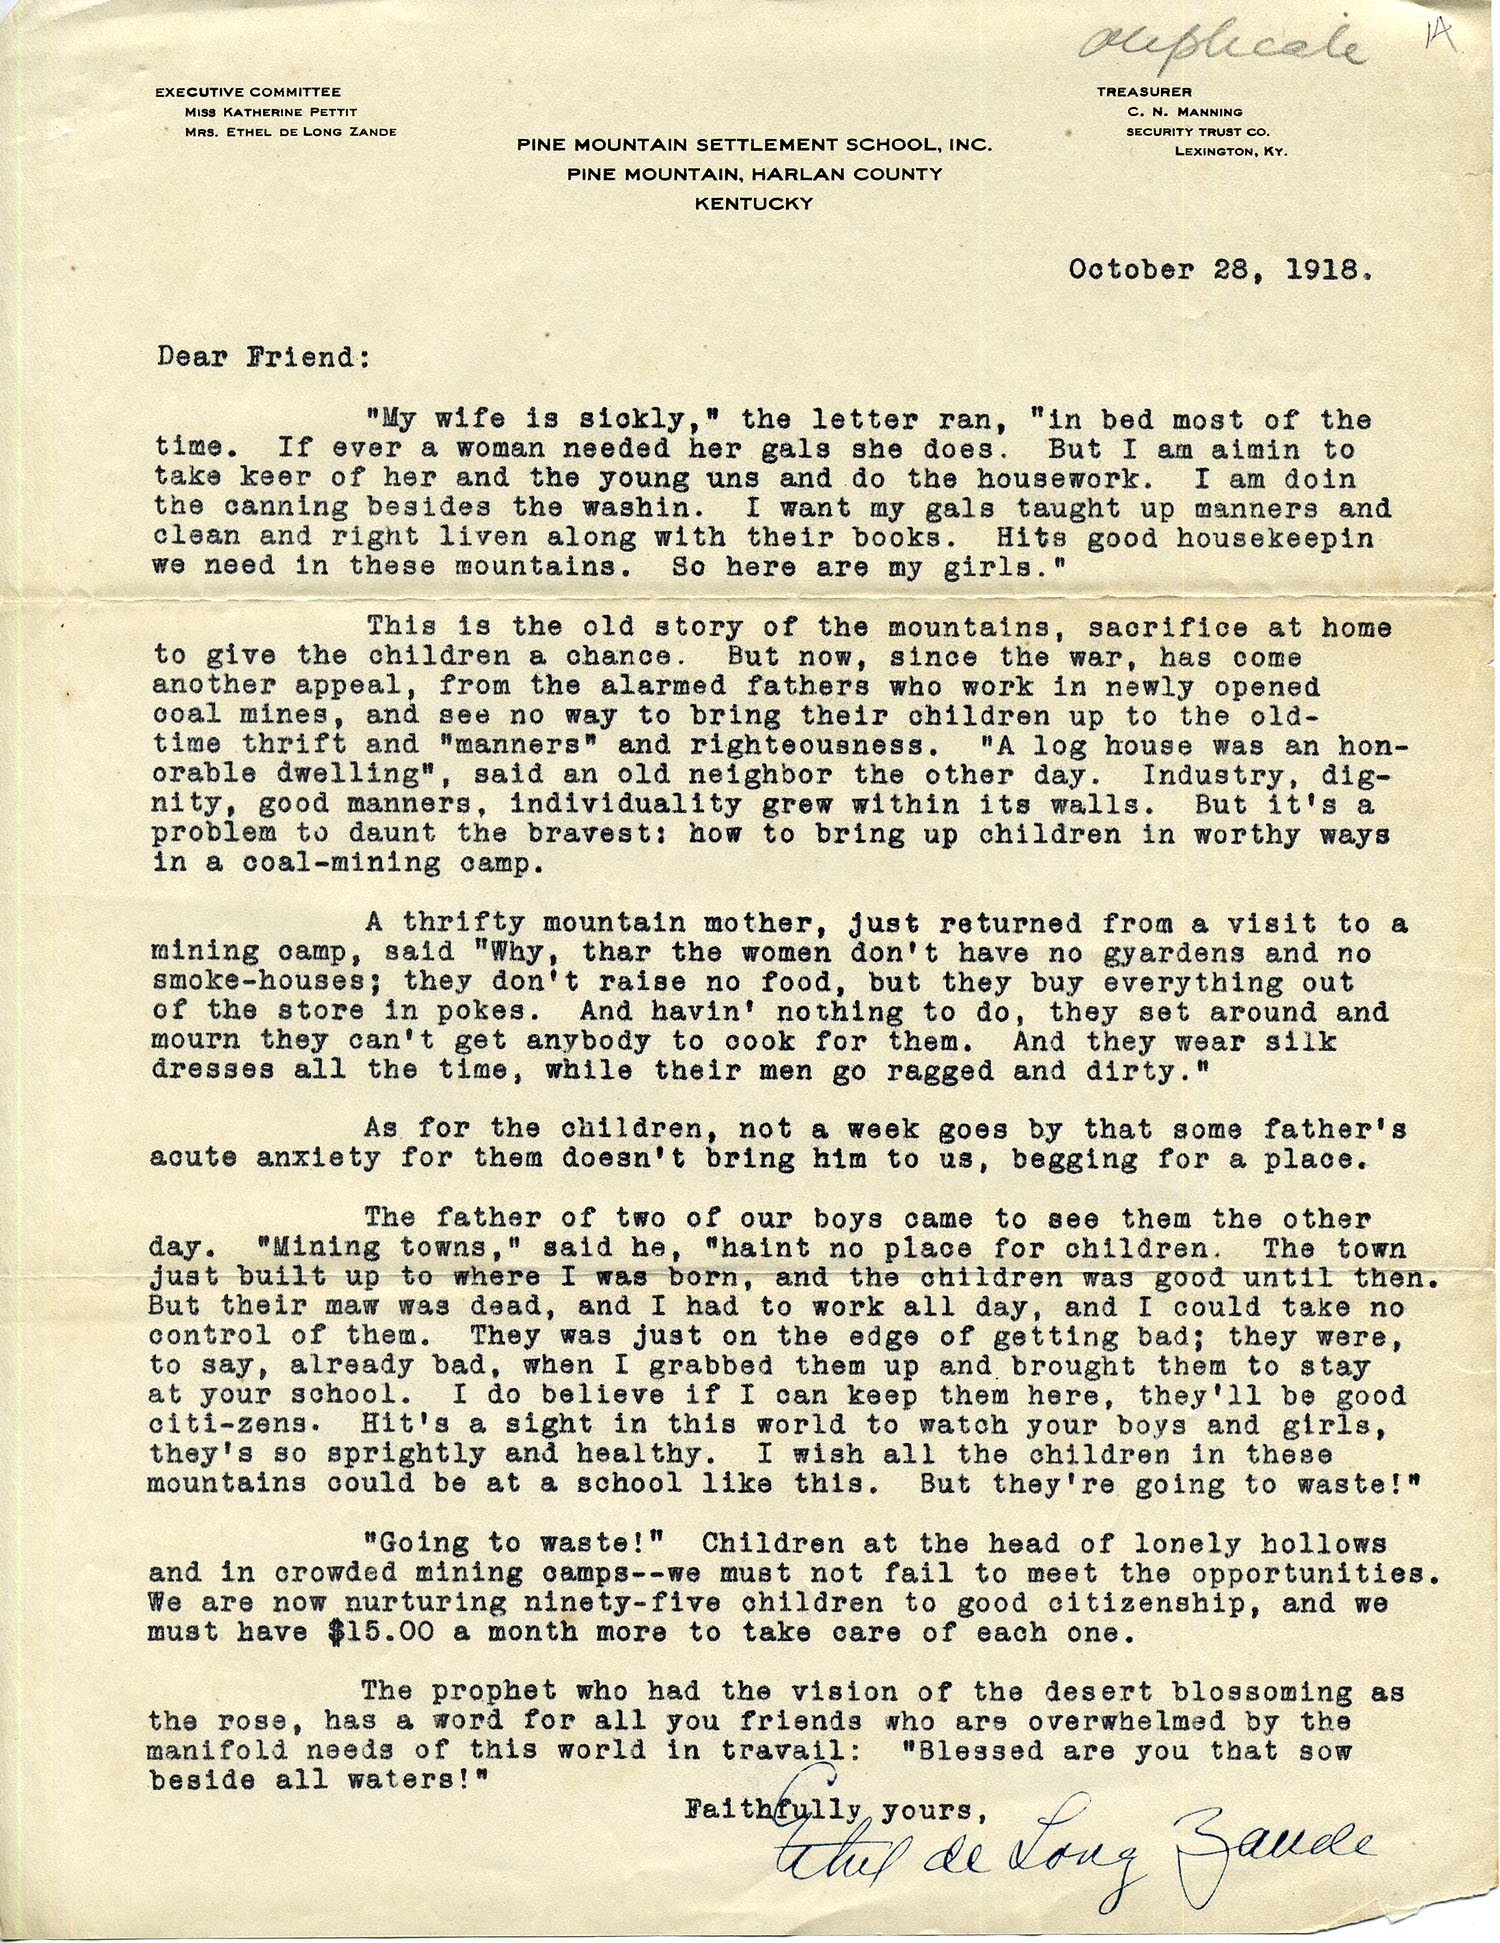 Dear Friend Letters 1918 Pine Mountain Settlement School Collections